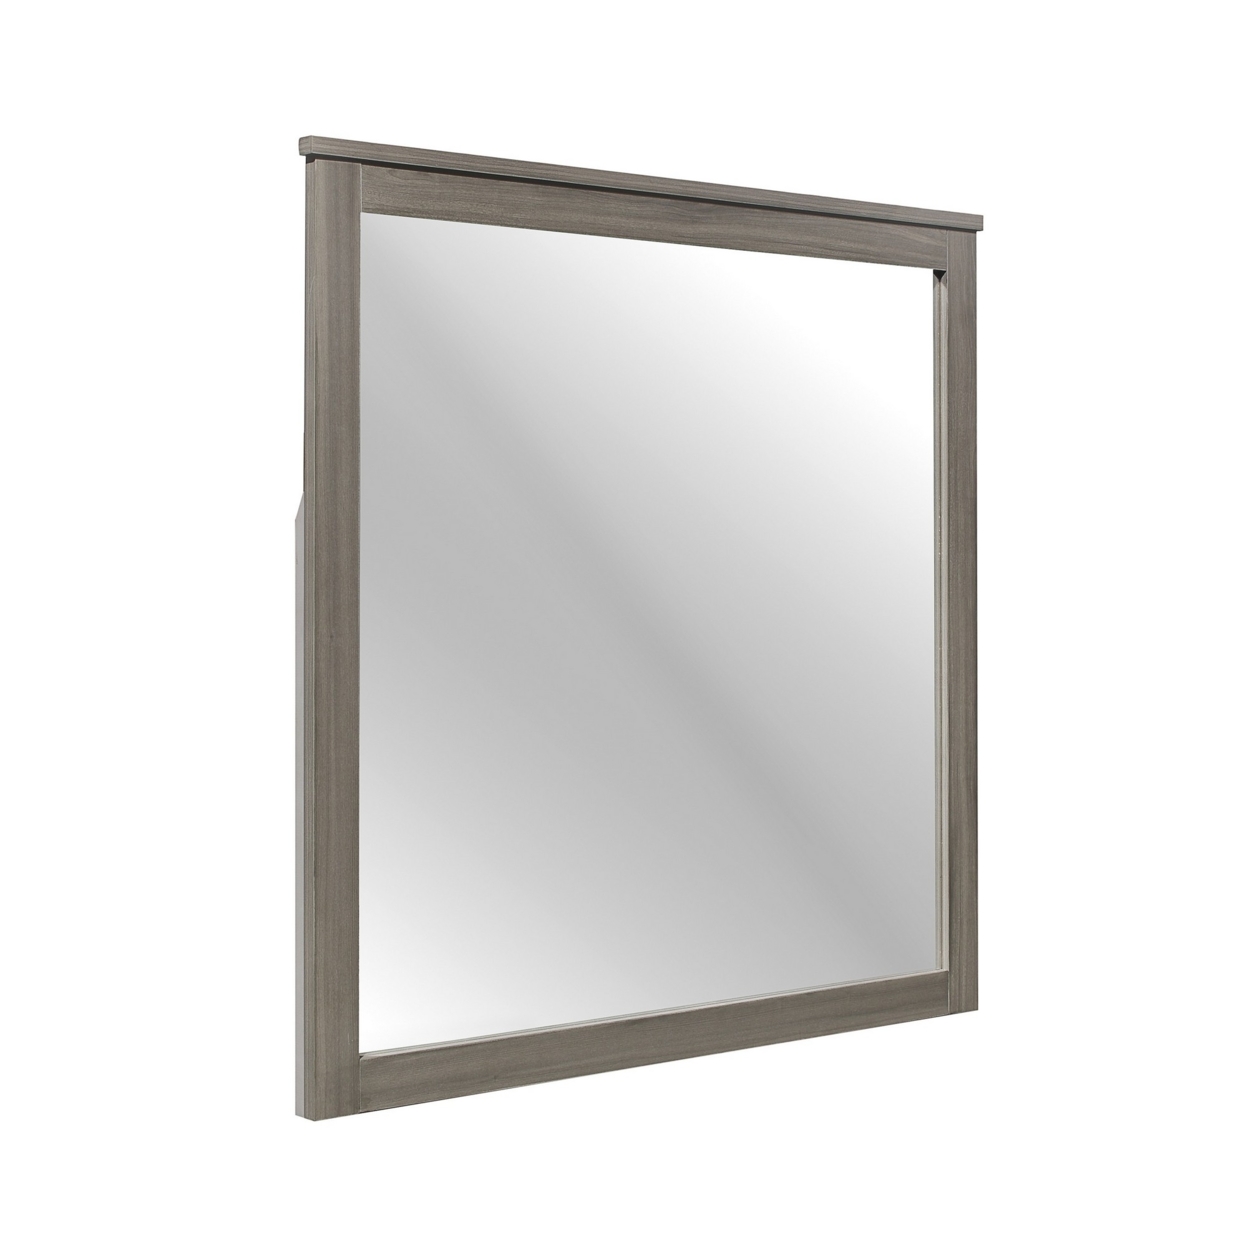 Square Wooden Frame Mirror With Grain Details, Dark Gray And Silver- Saltoro Sherpi